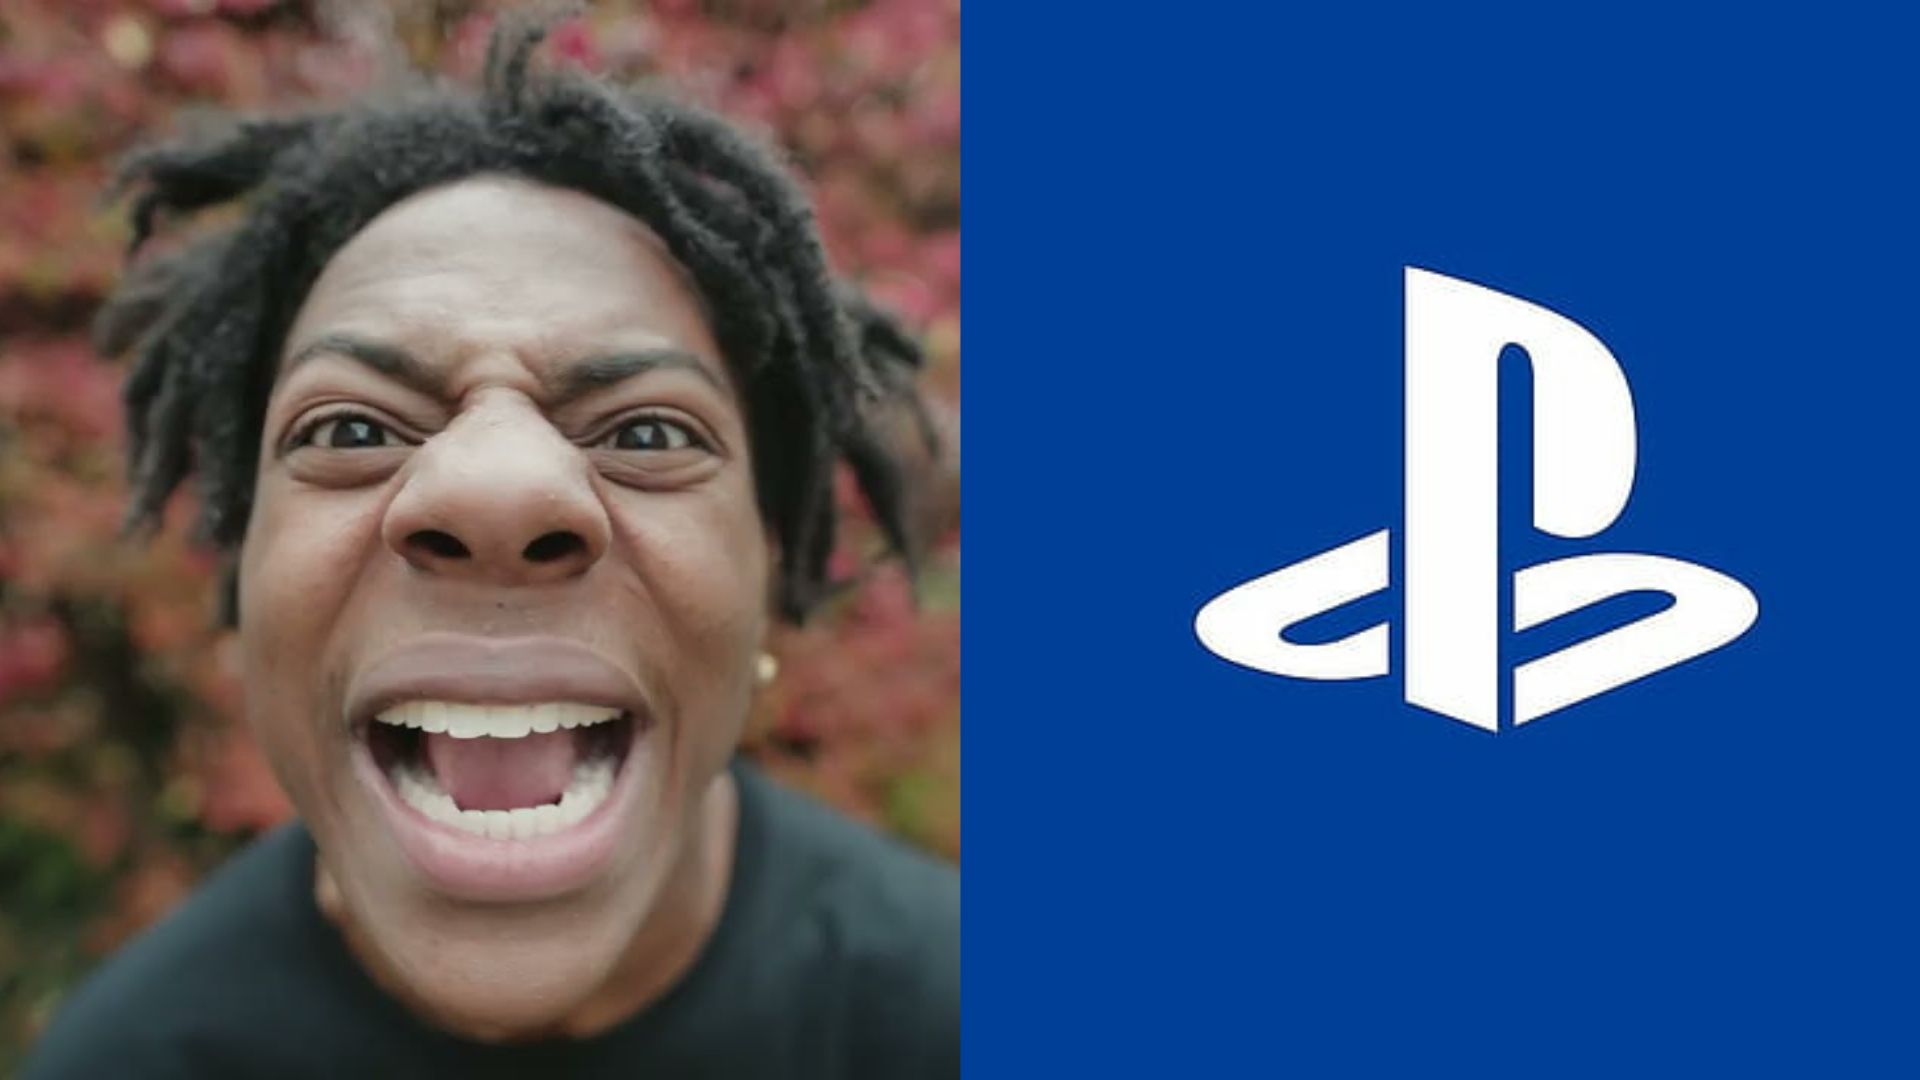 PlayStation Bans IShowSpeed